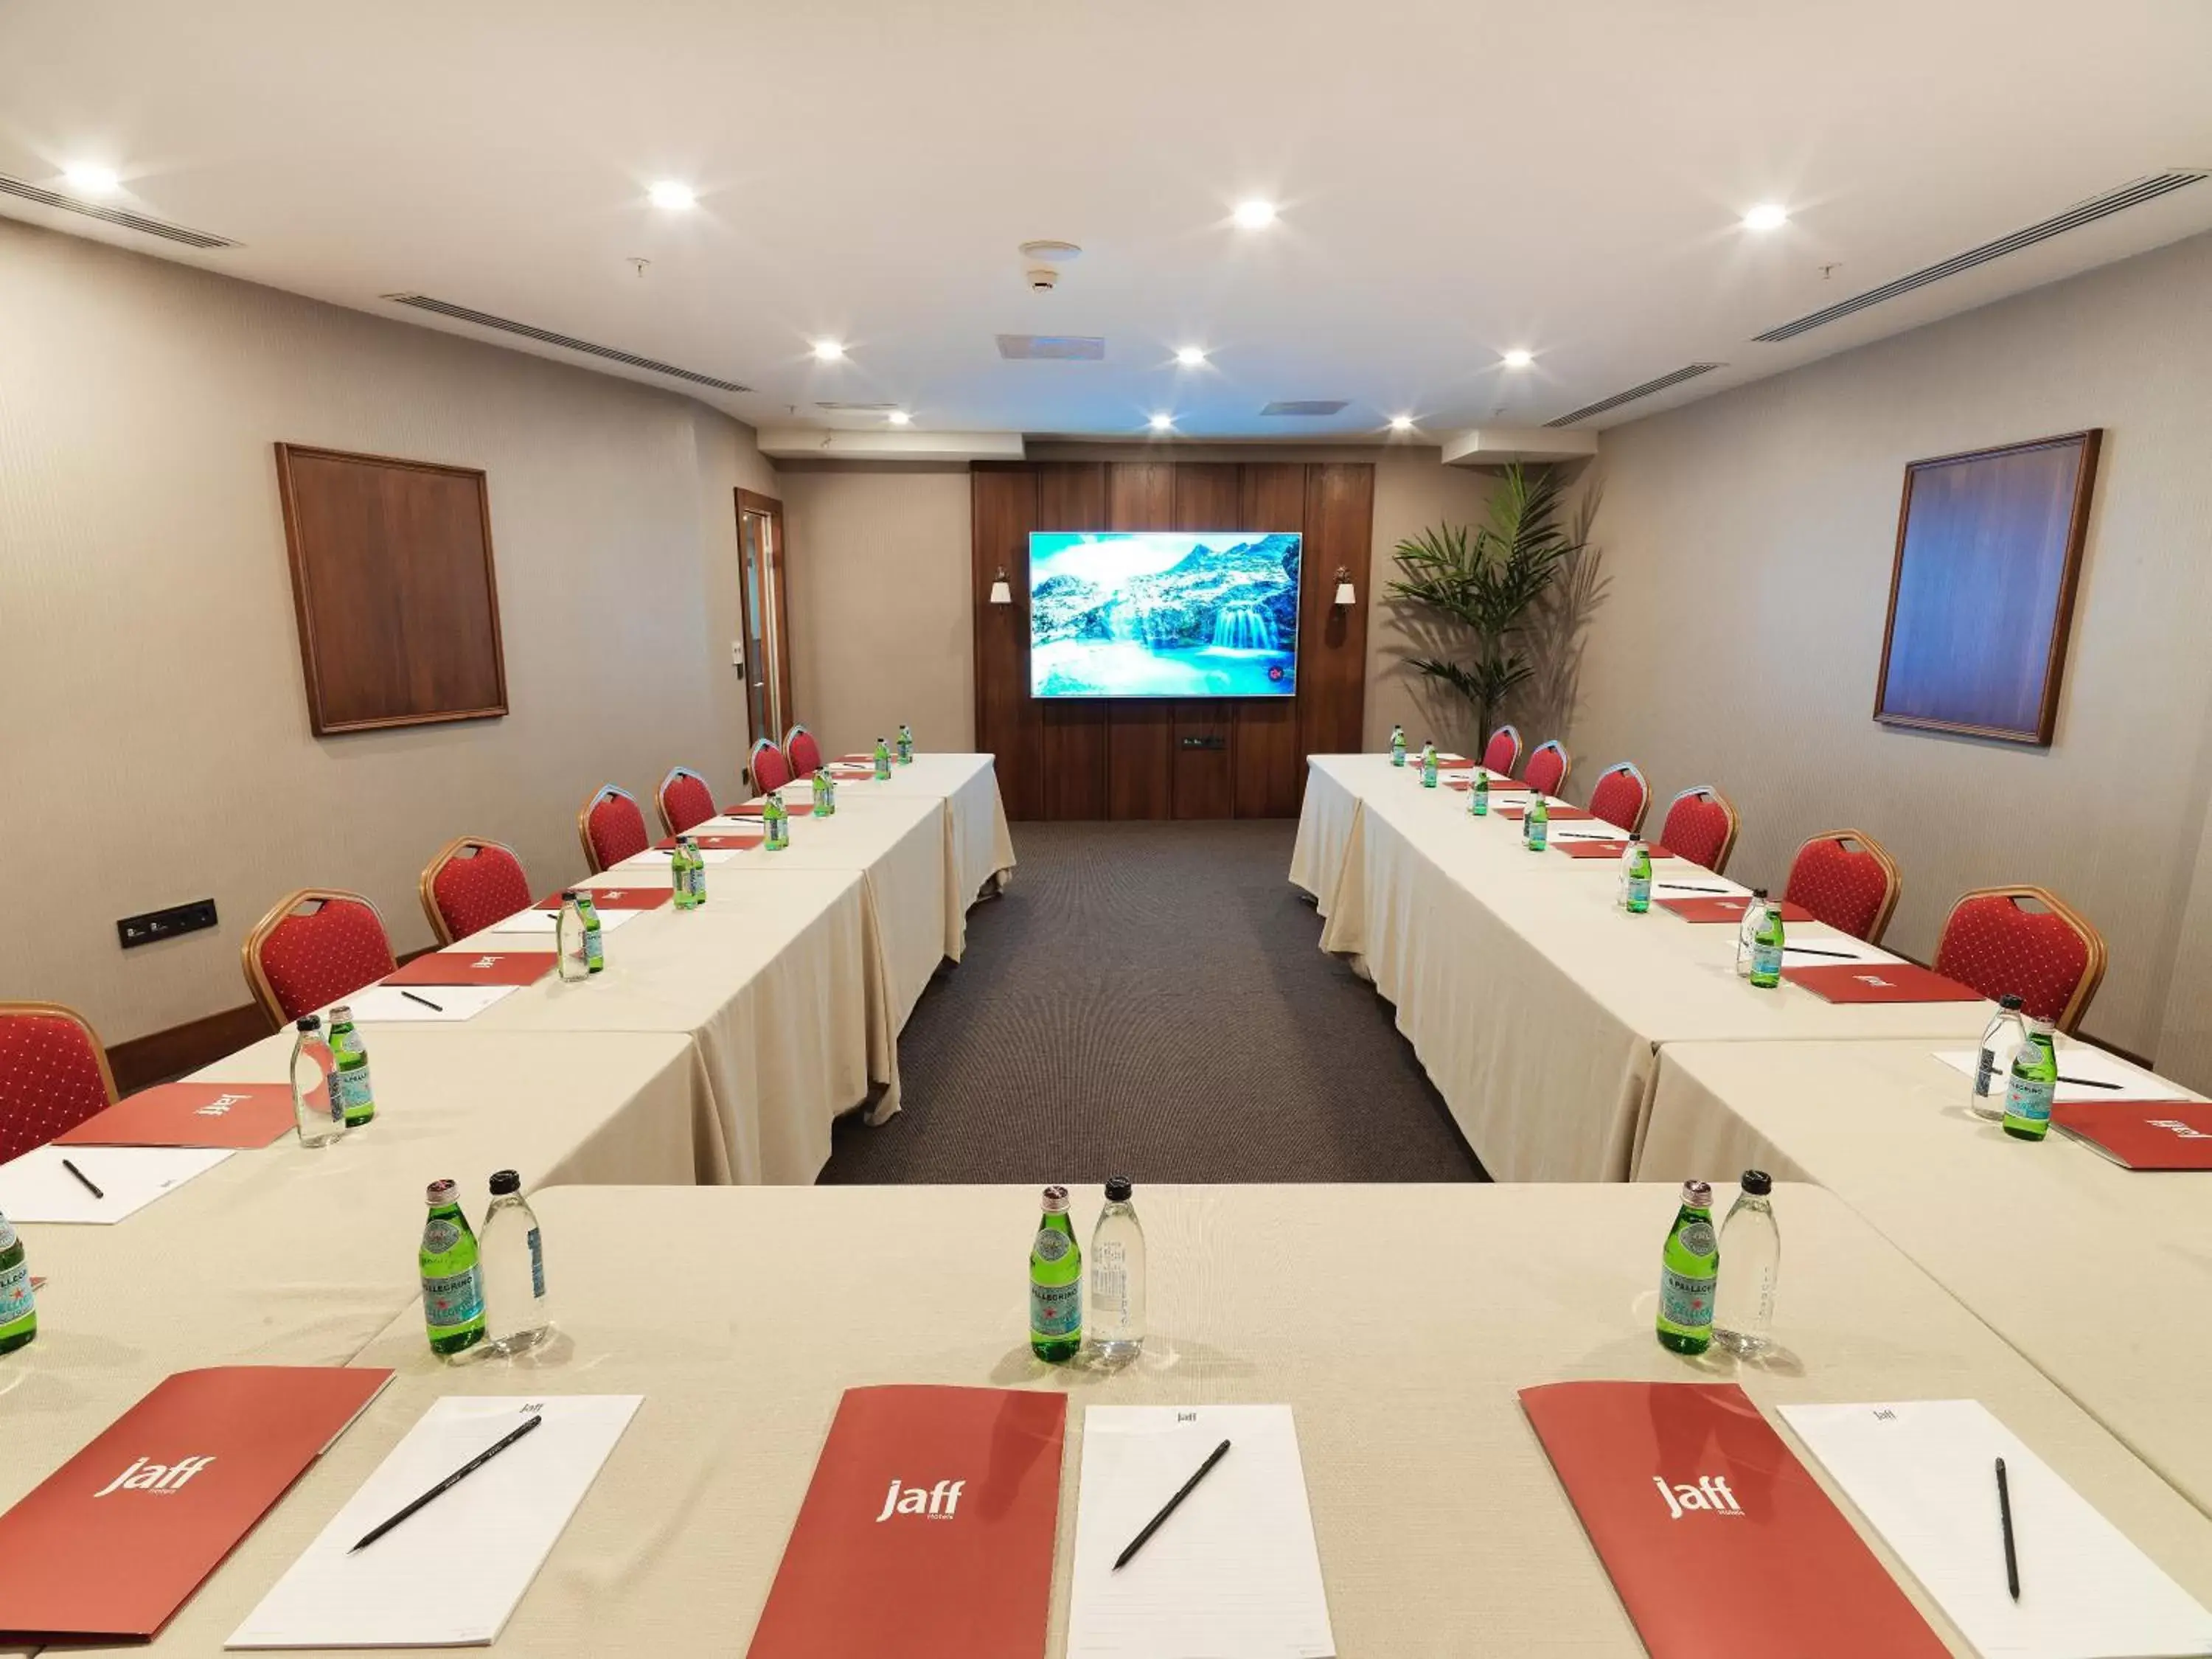 Meeting/conference room in Jaff Hotels & Spa Nisantasi